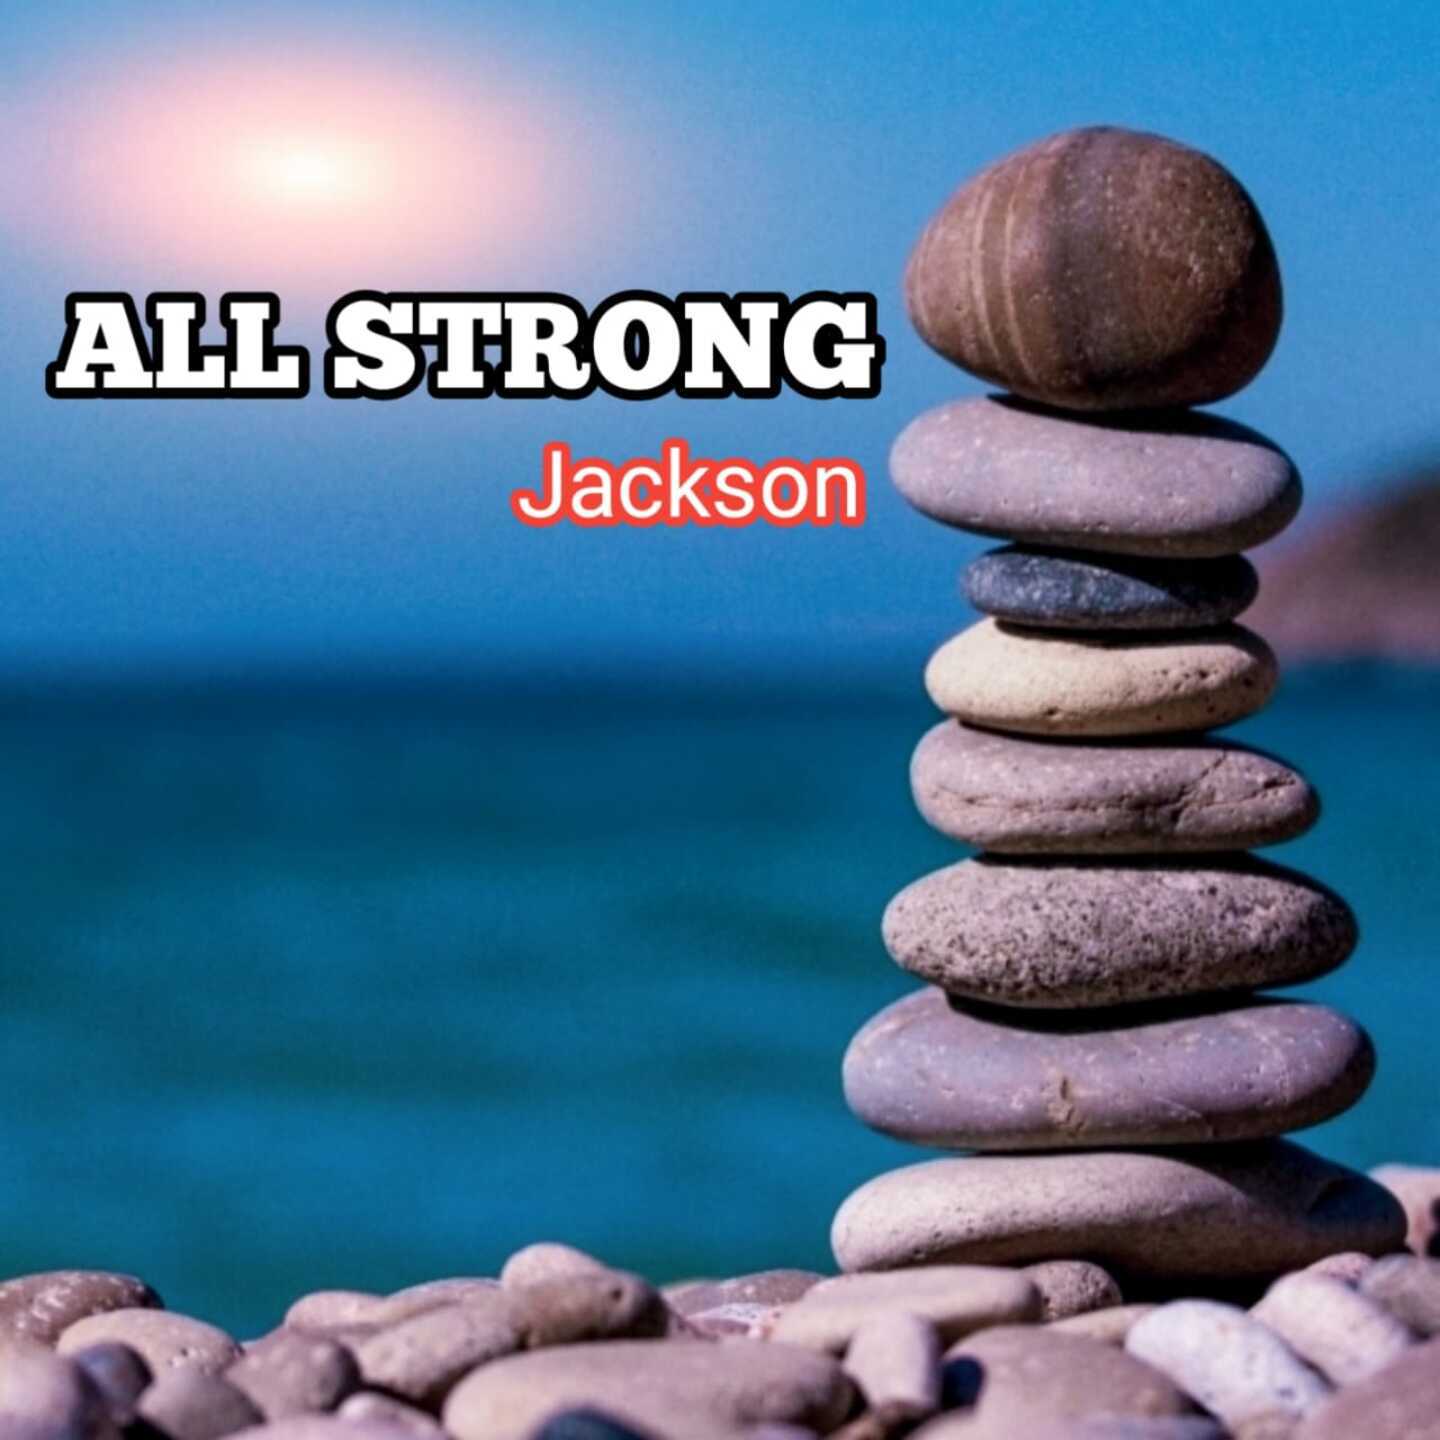 jackson - All Strong